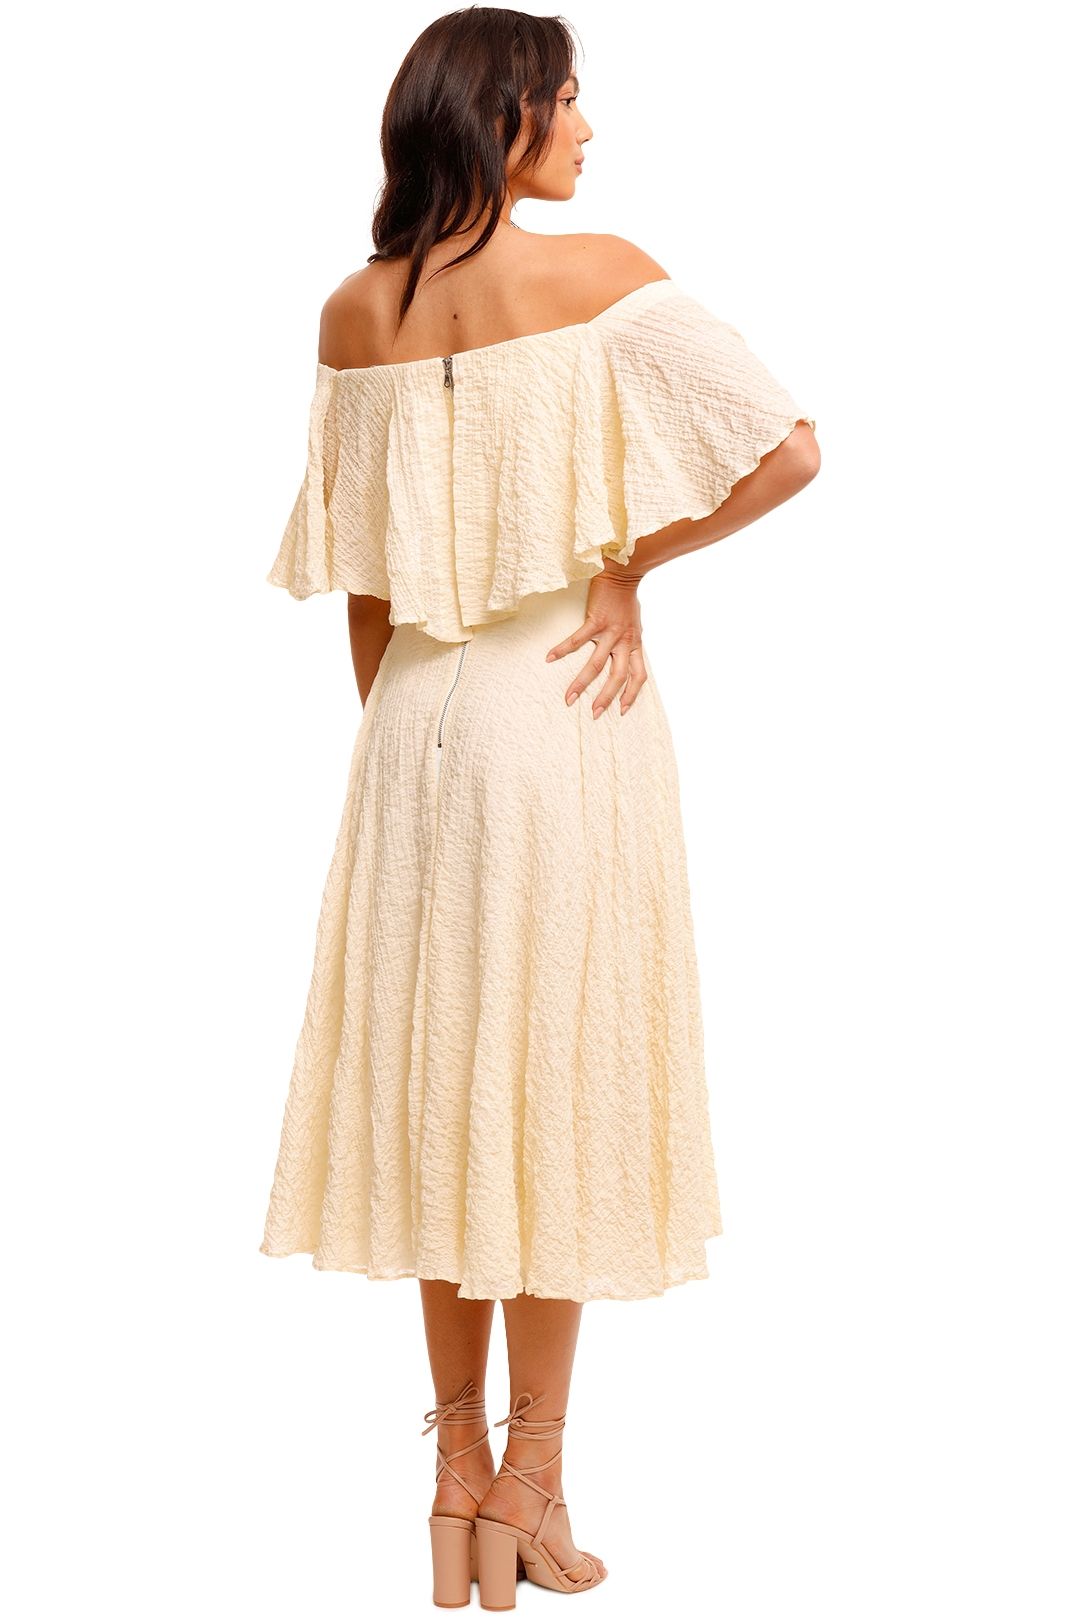 KITX Cotton White Tiered Dress